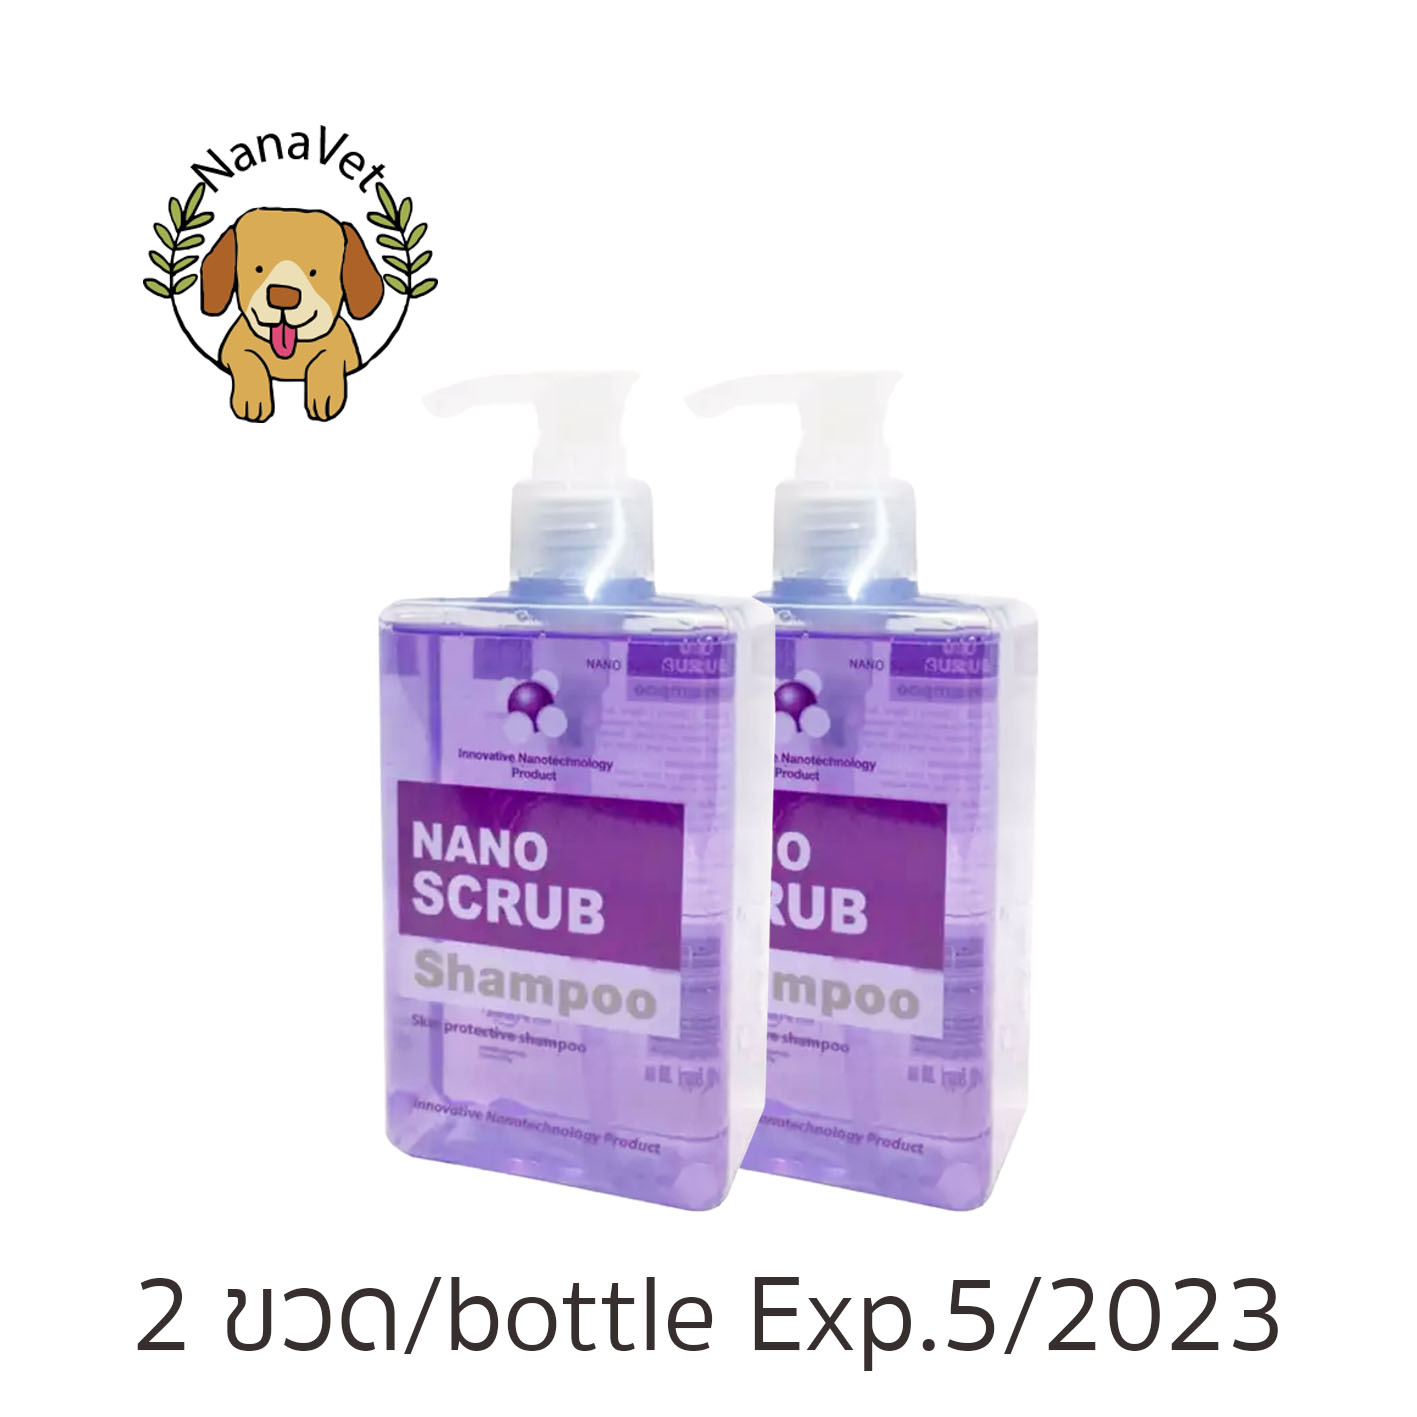 Nano Scrub Shampoo แชมพู นาโน สครับ 280 ml Exp.5/2023 Vet Planet สุนัข แมว ฆ่าเชื้อโรค แบคทีเรีย ลดกลิ่นตัว สูตรอ่อนโยน ไม่ระคายเคือง dog cat (2 ขวด/bottles)